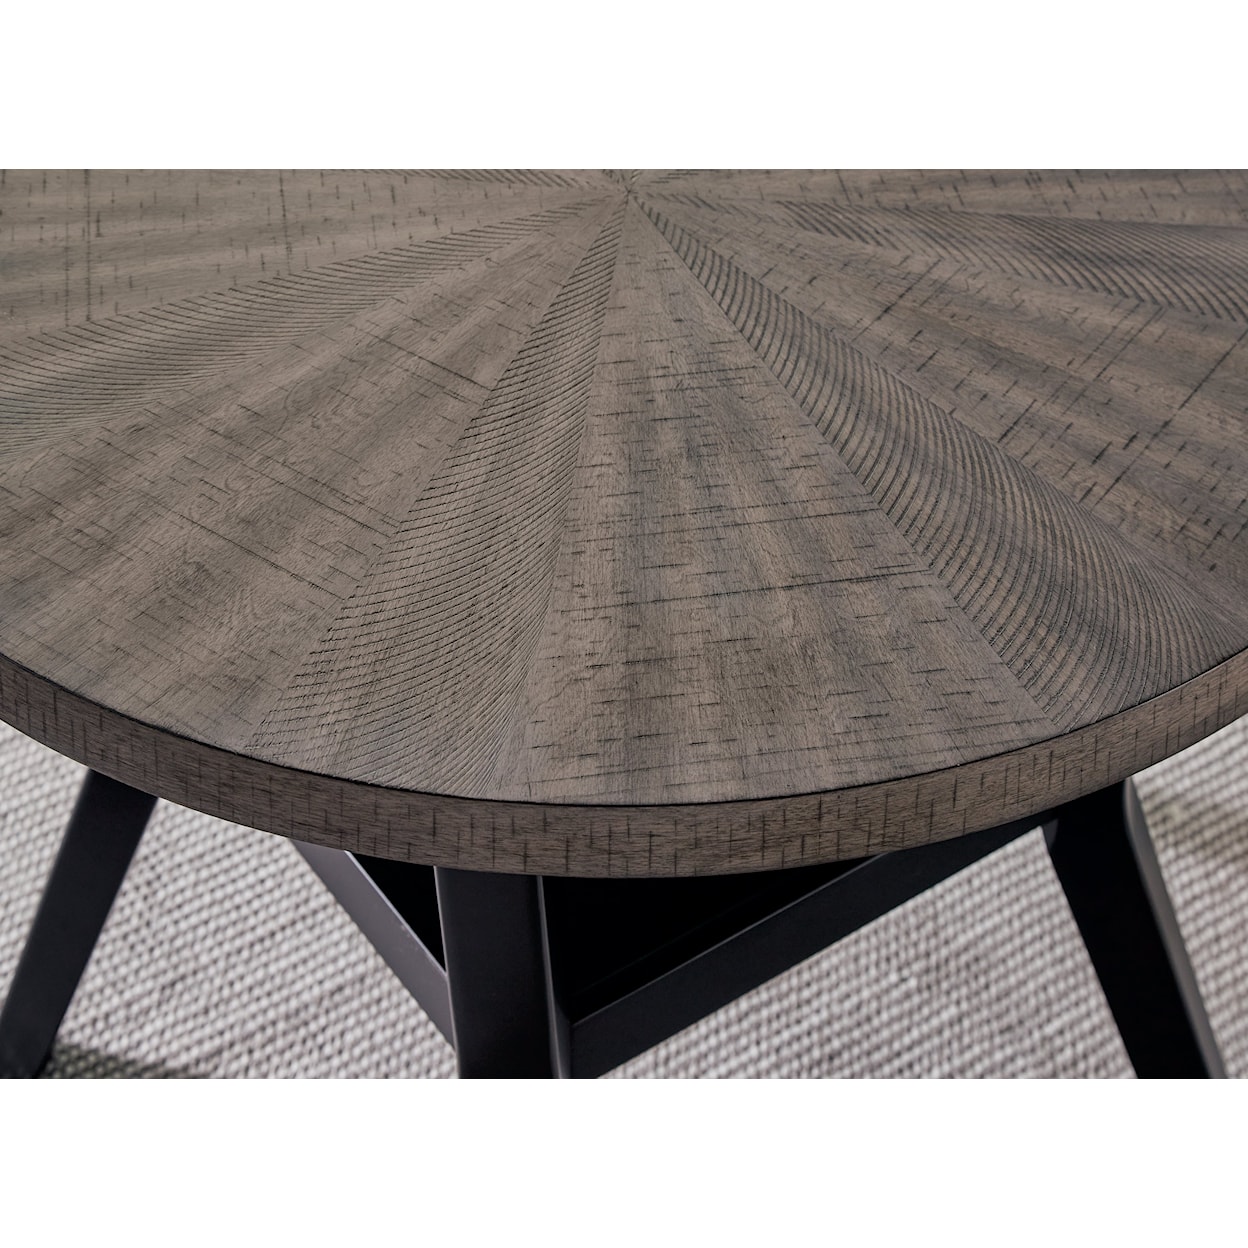 Ashley Furniture Signature Design Corloda Round Counter Table Set